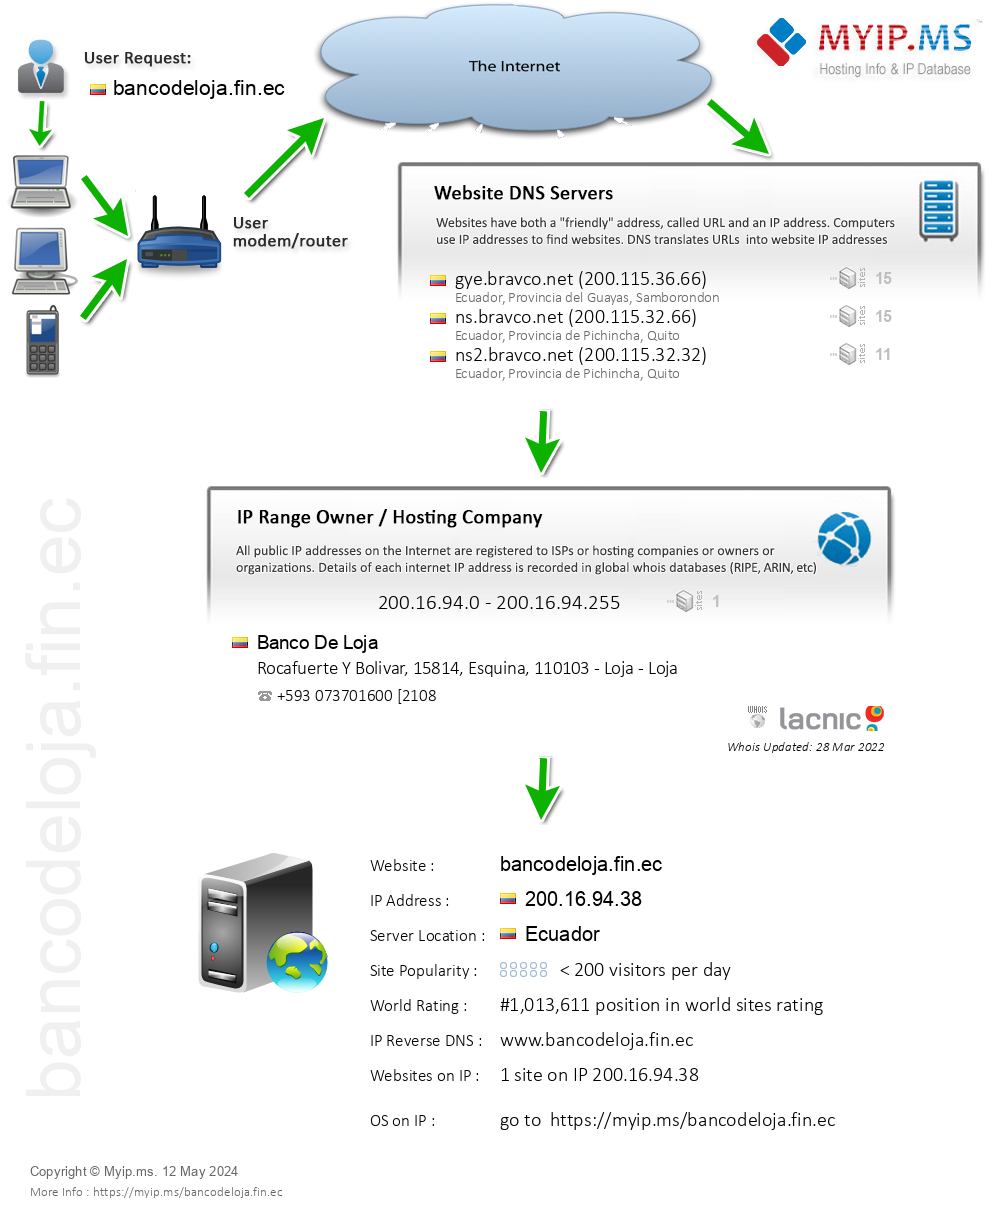 Bancodeloja.fin.ec - Website Hosting Visual IP Diagram